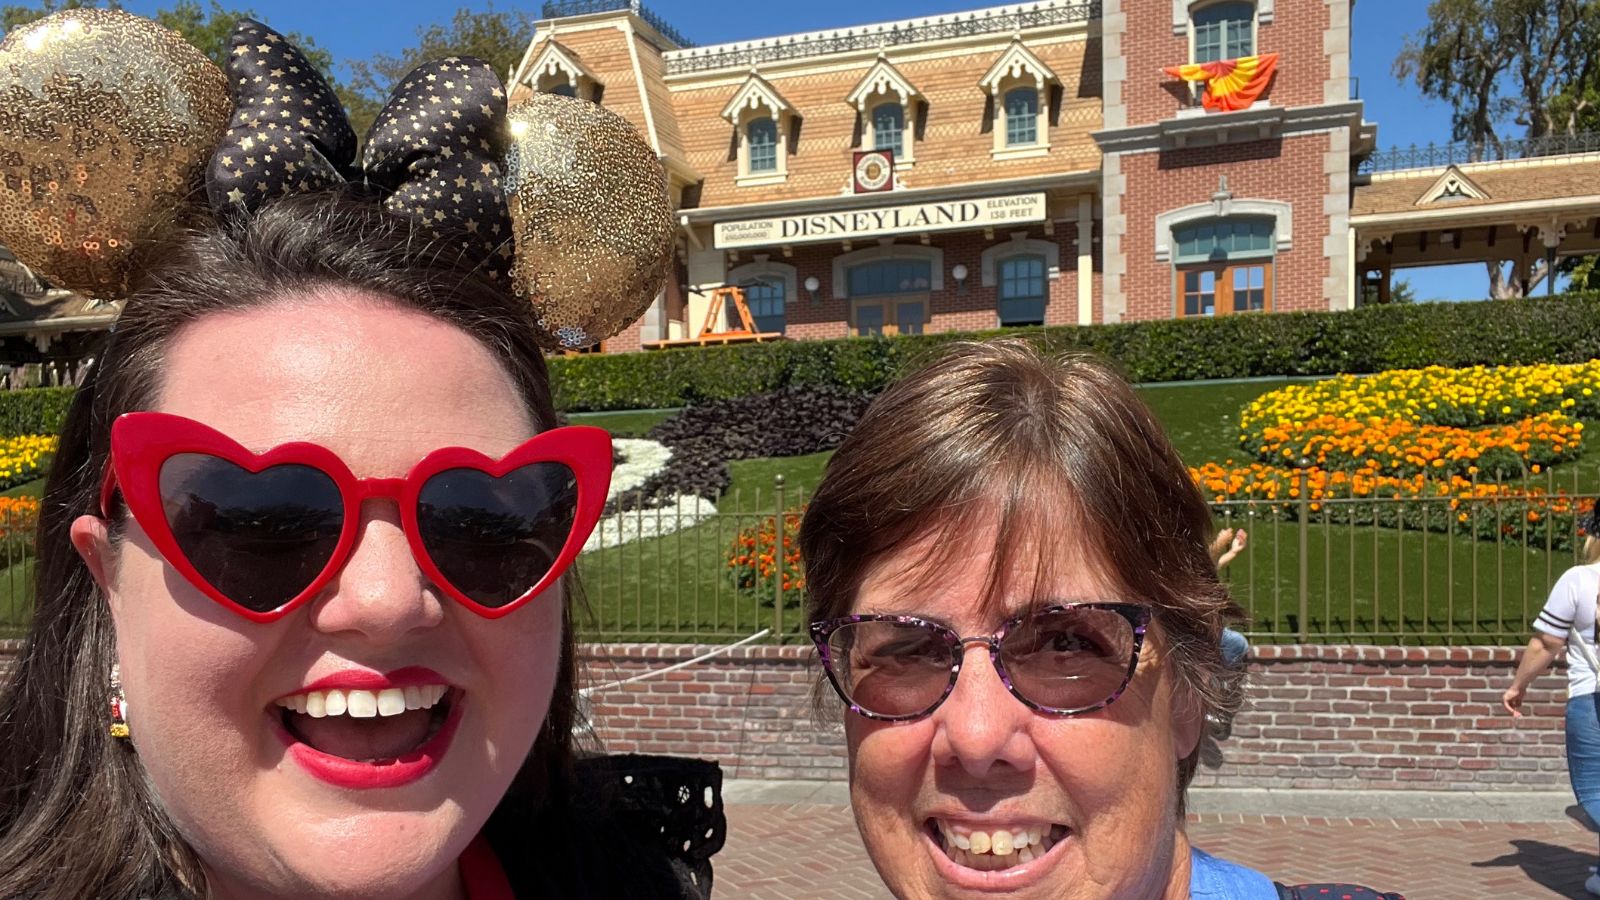 Making family memories at Disneyland doesn't have to break the bank (Photo: Megan duBois)